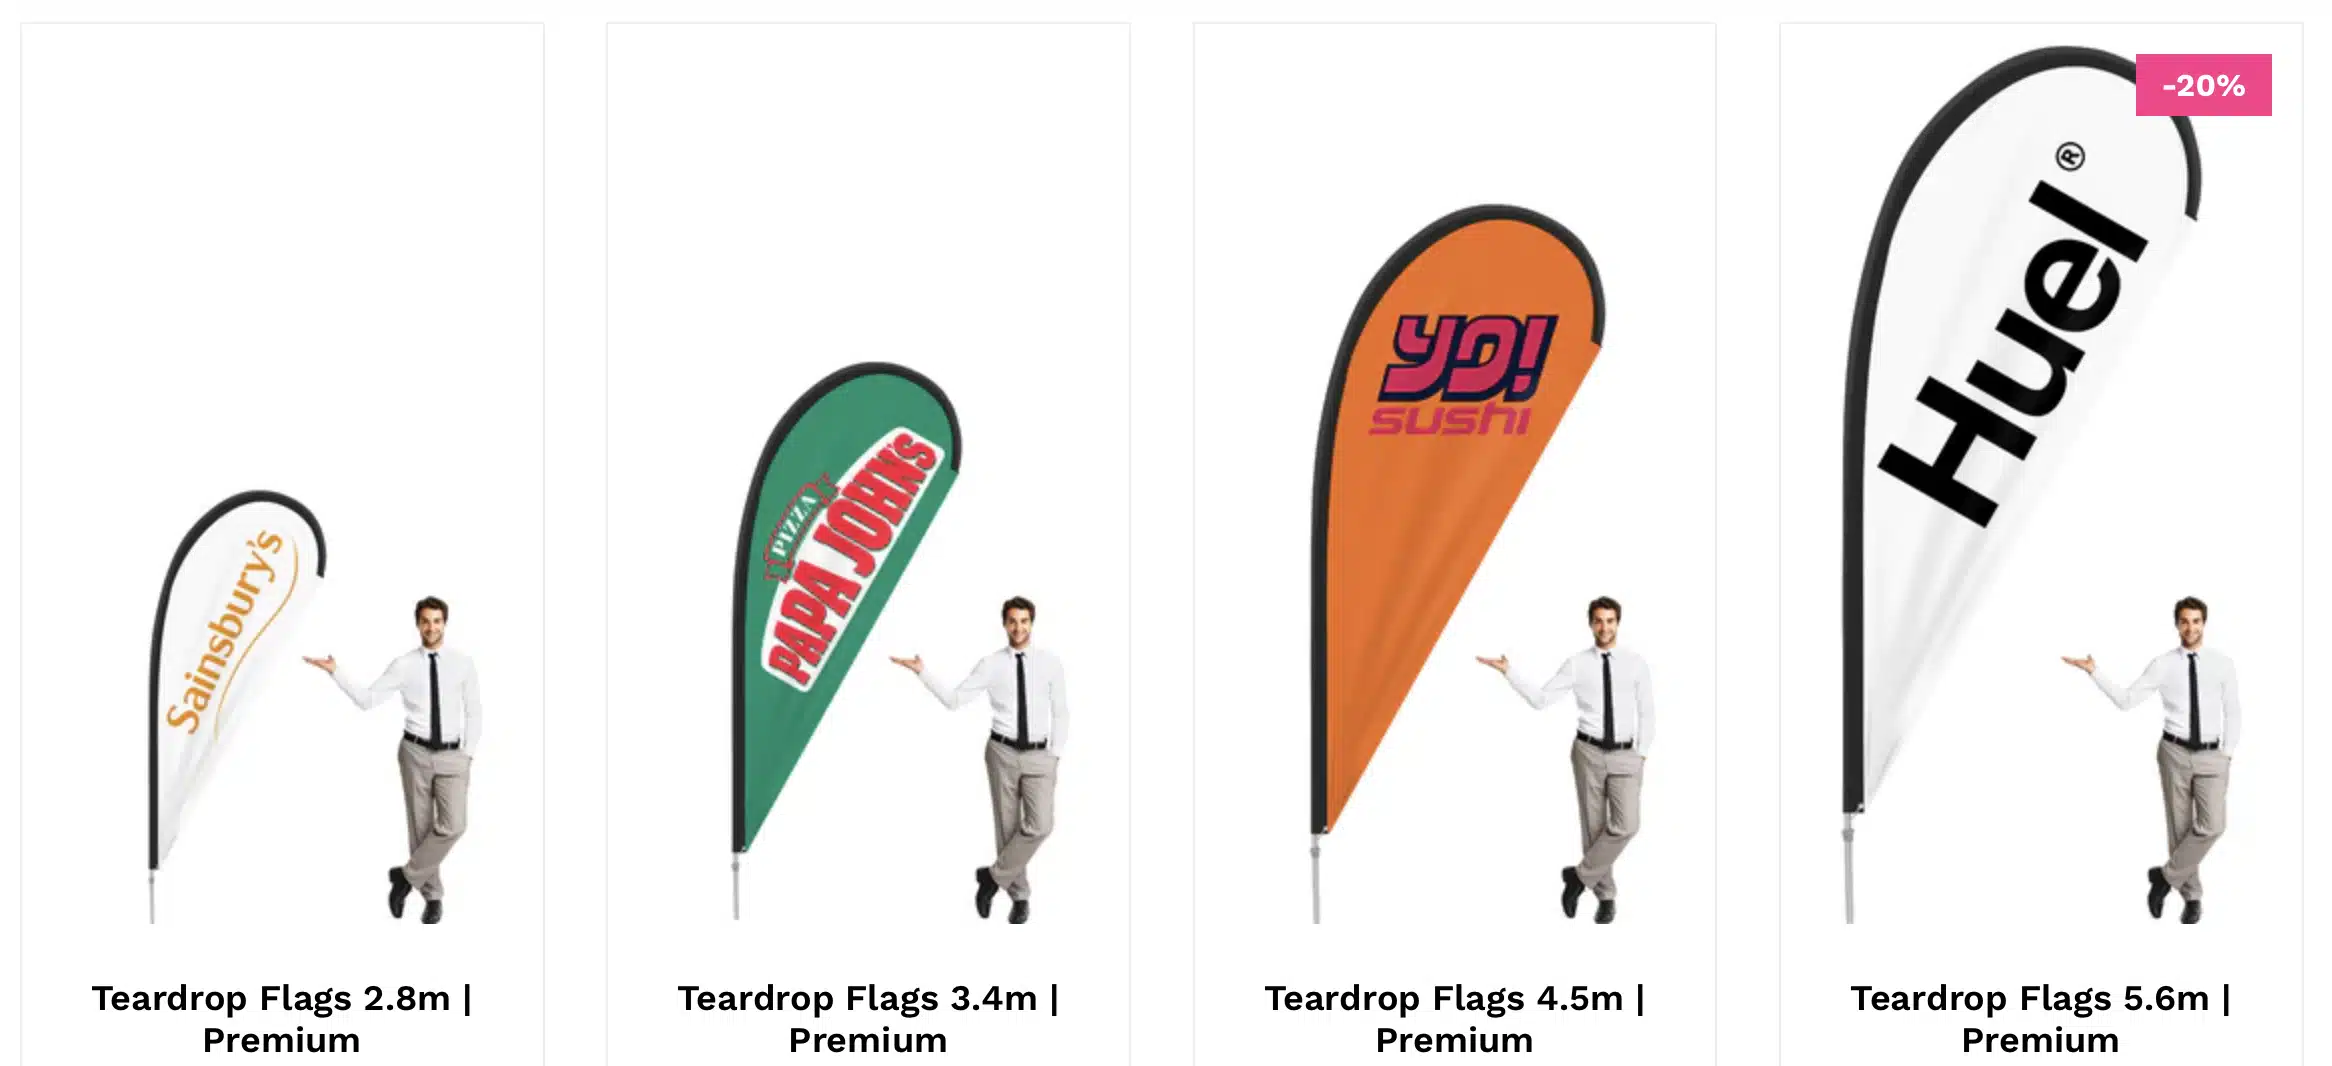 Teardrop flag sizes